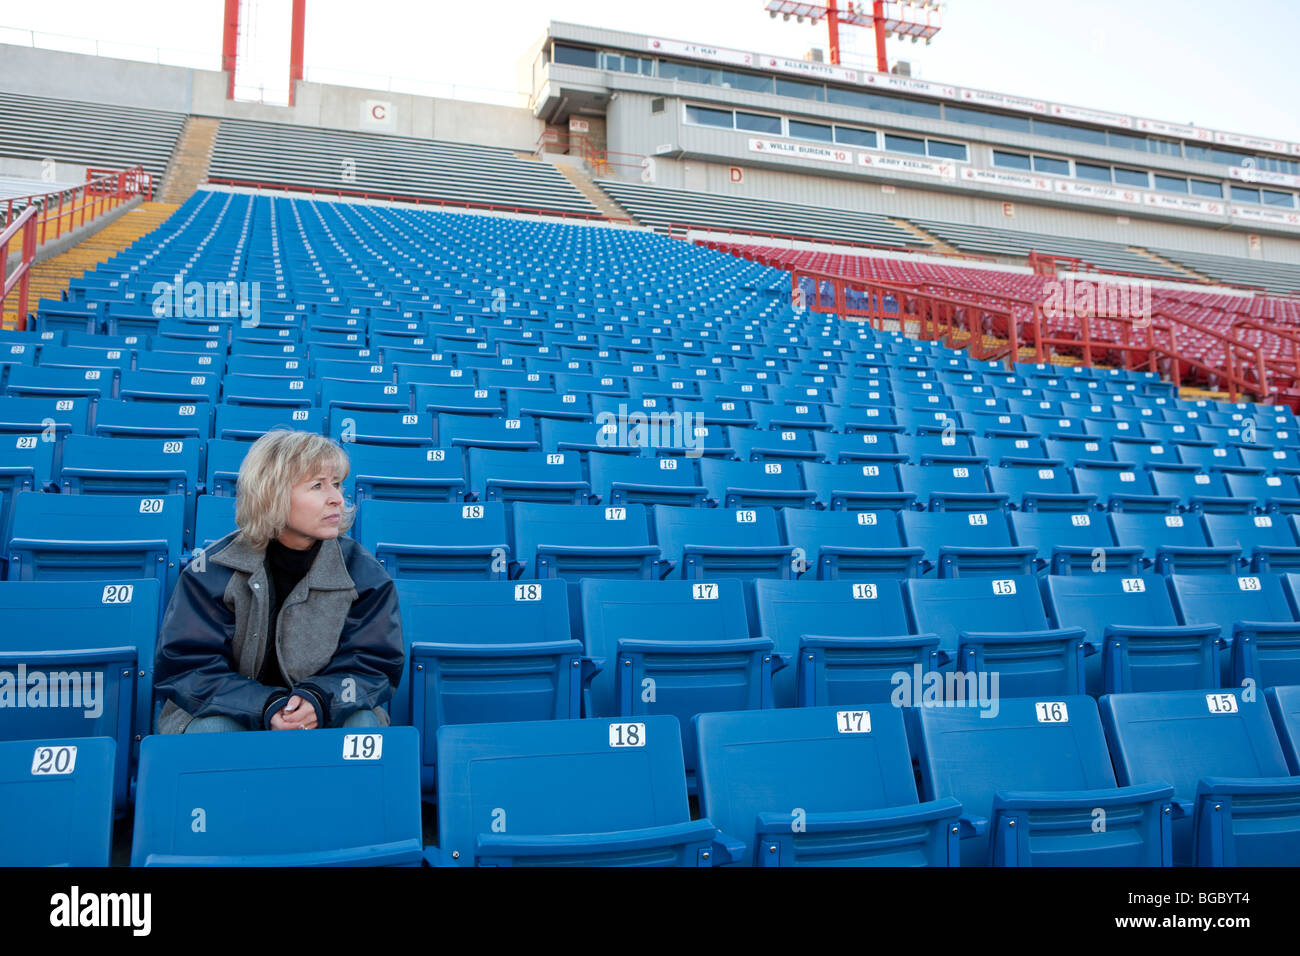 woman-sitting-alone-in-stadium-seats-BGBYT4.jpg